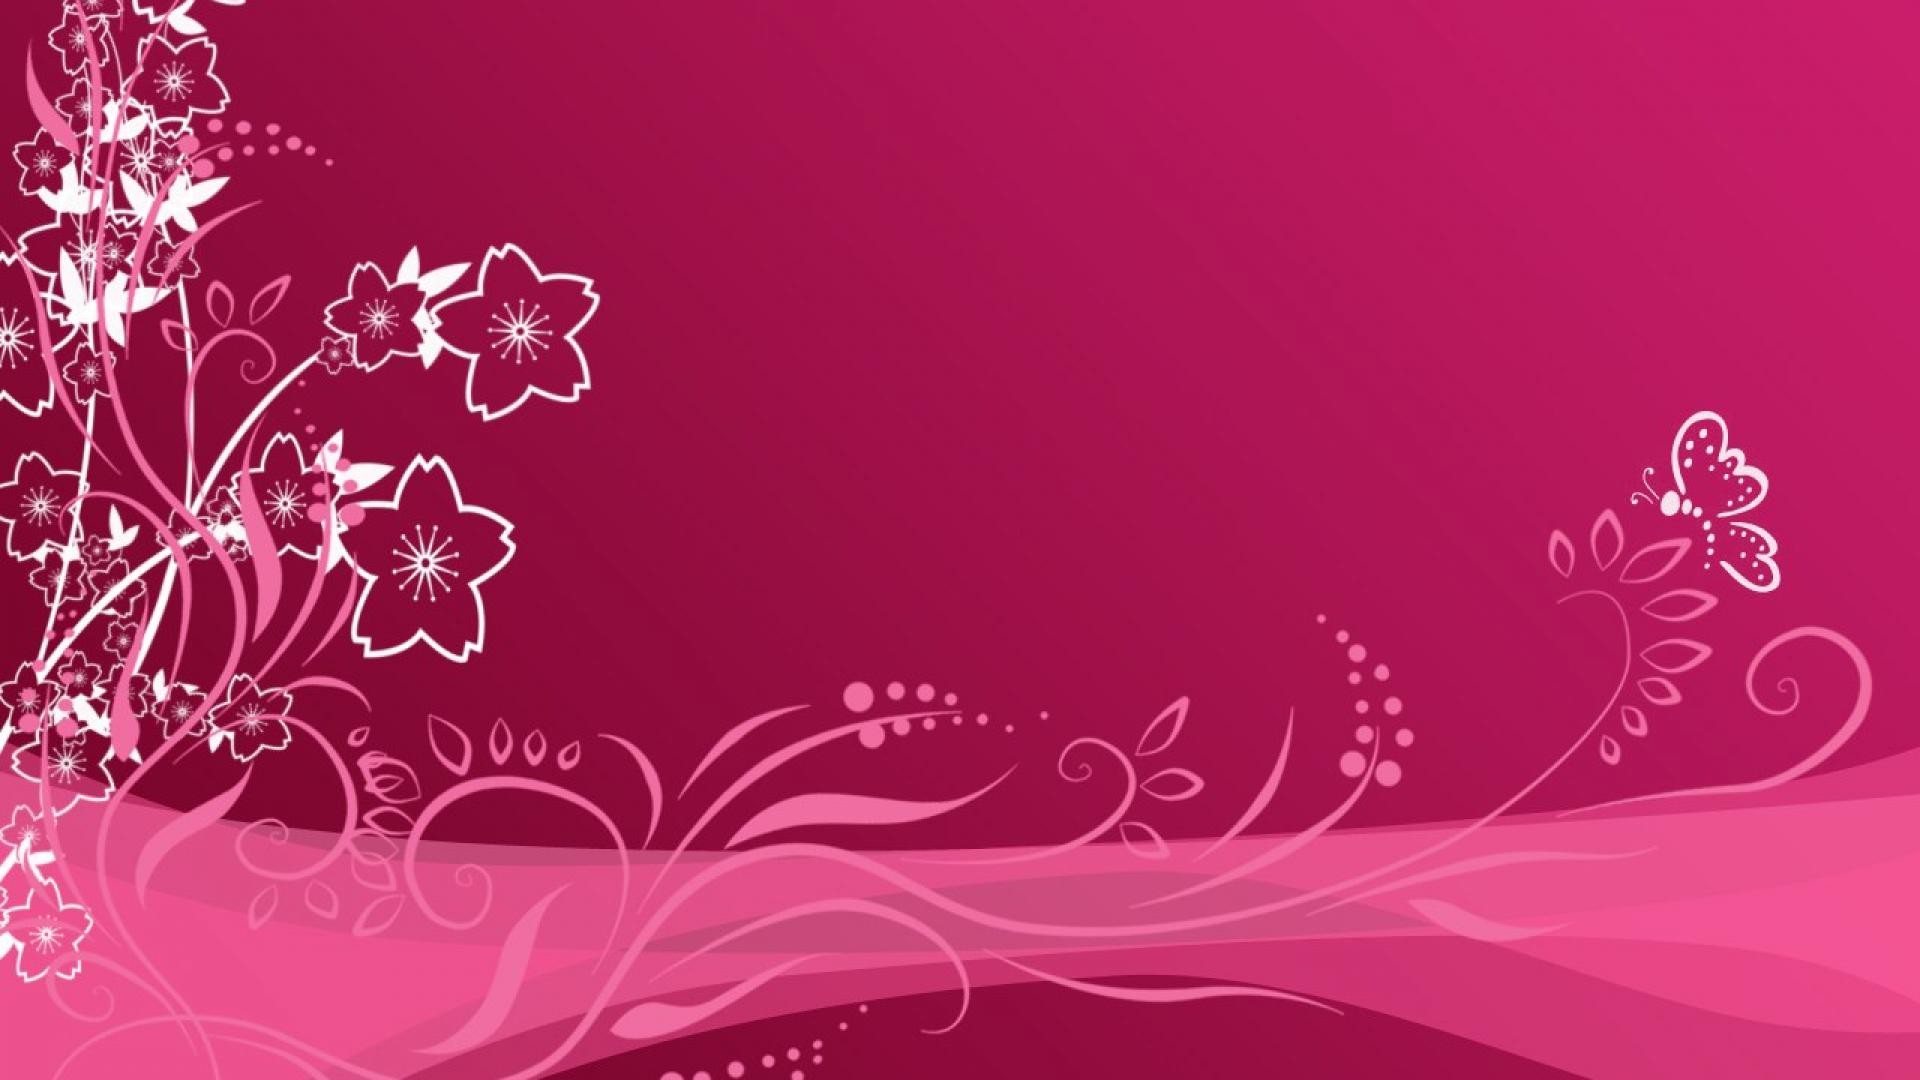 girly desktop wallpaper, pink, text, magenta, purple, floral design